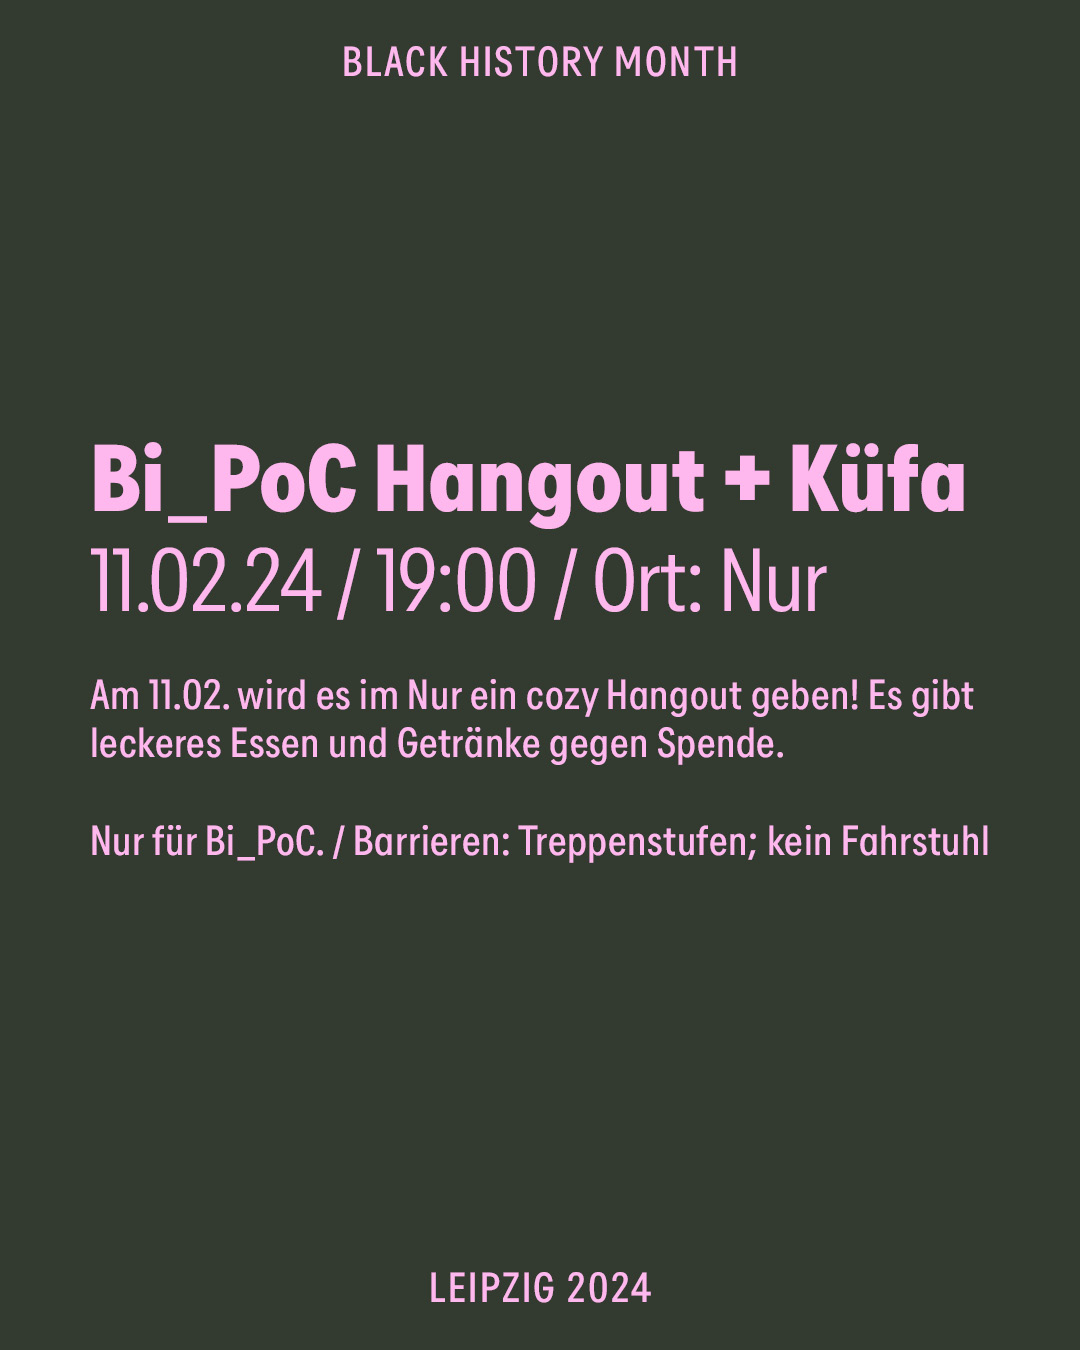 Bi_POC Hangout+ Küfa